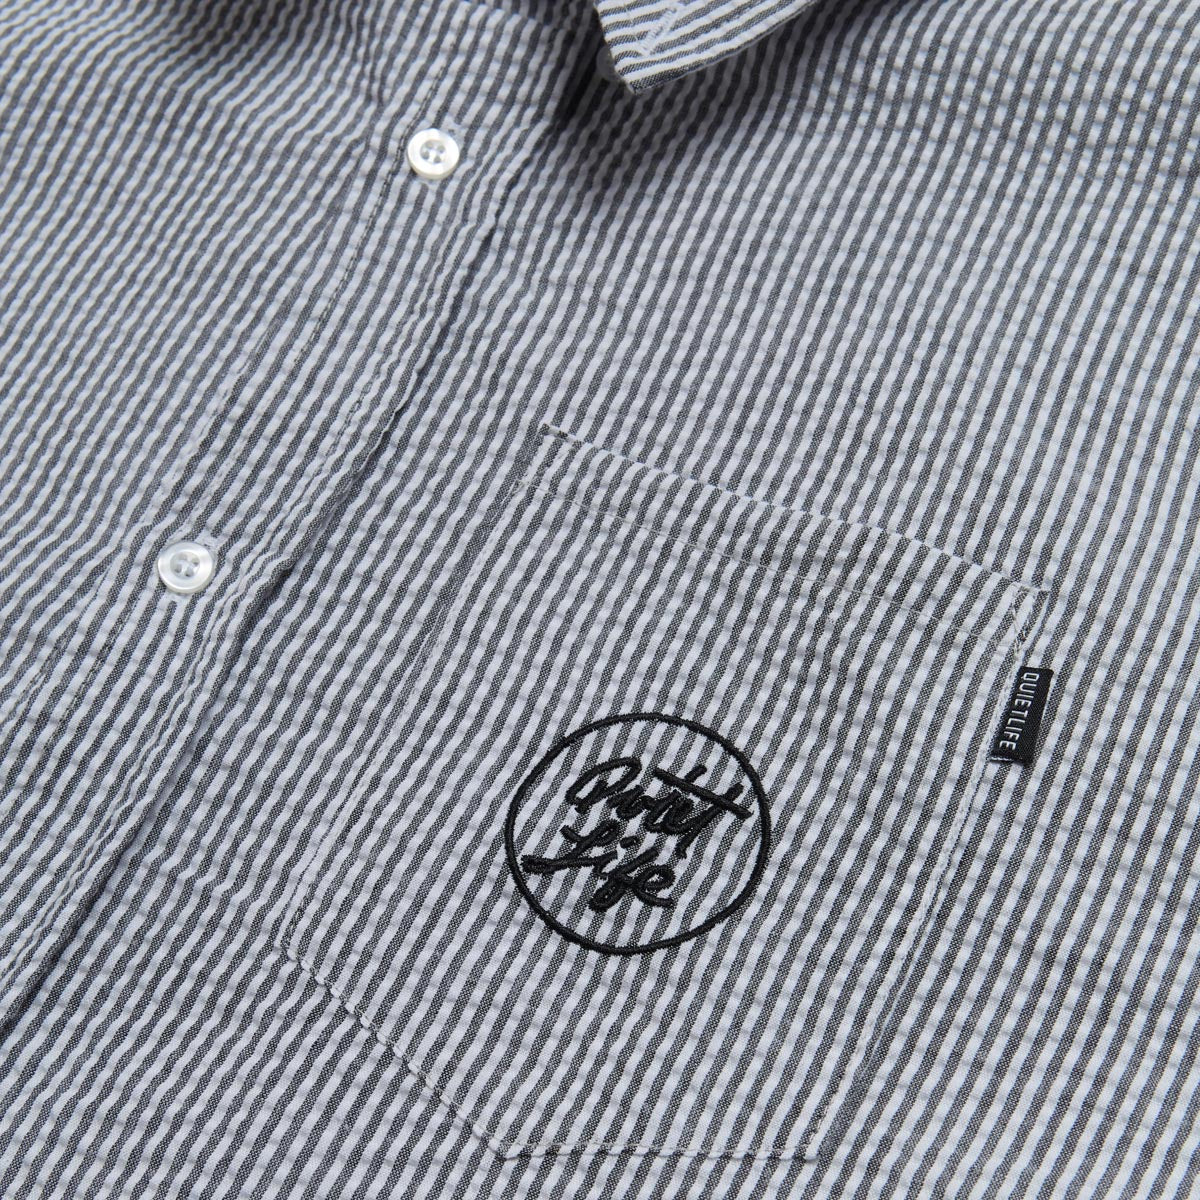 The Quiet Life Seersucker Button Down Shirt - Black image 2